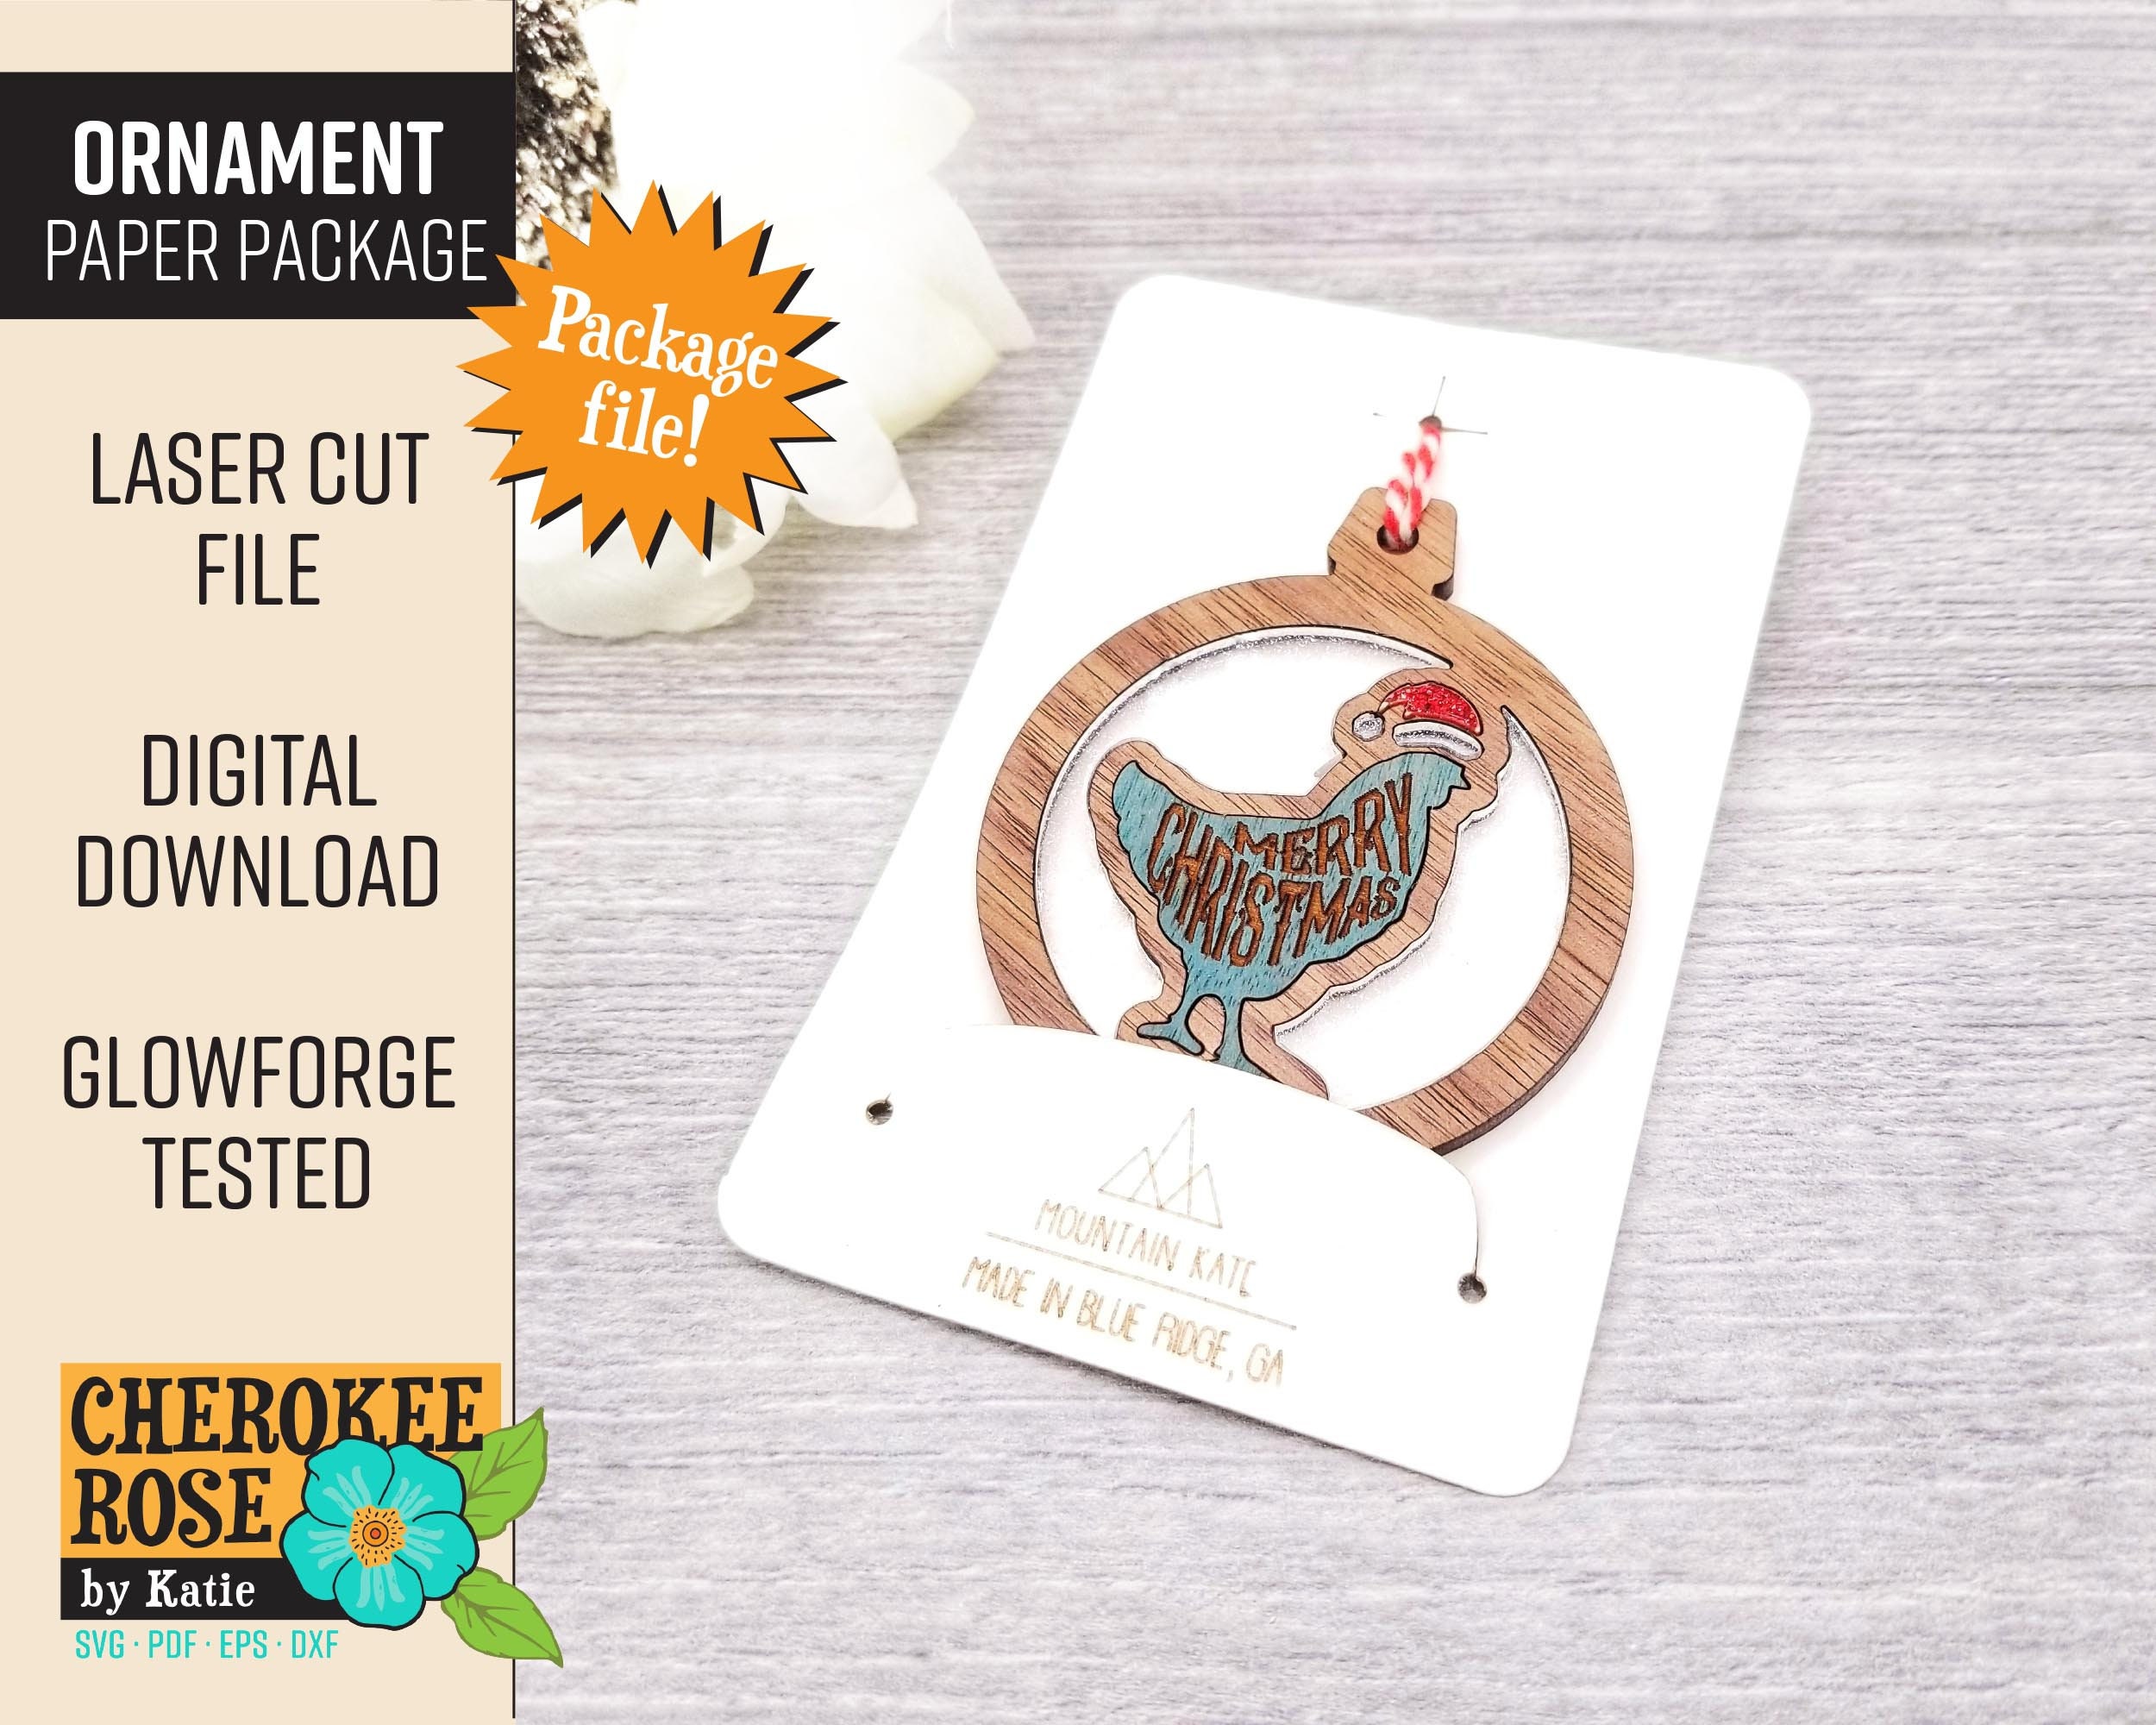 batifine Necklace Display Cards,Jewelry Packaging Cards for Small Business  Jewelry Packaging,Necklace Earrings Card Holder for DIY Necklace Bracelet